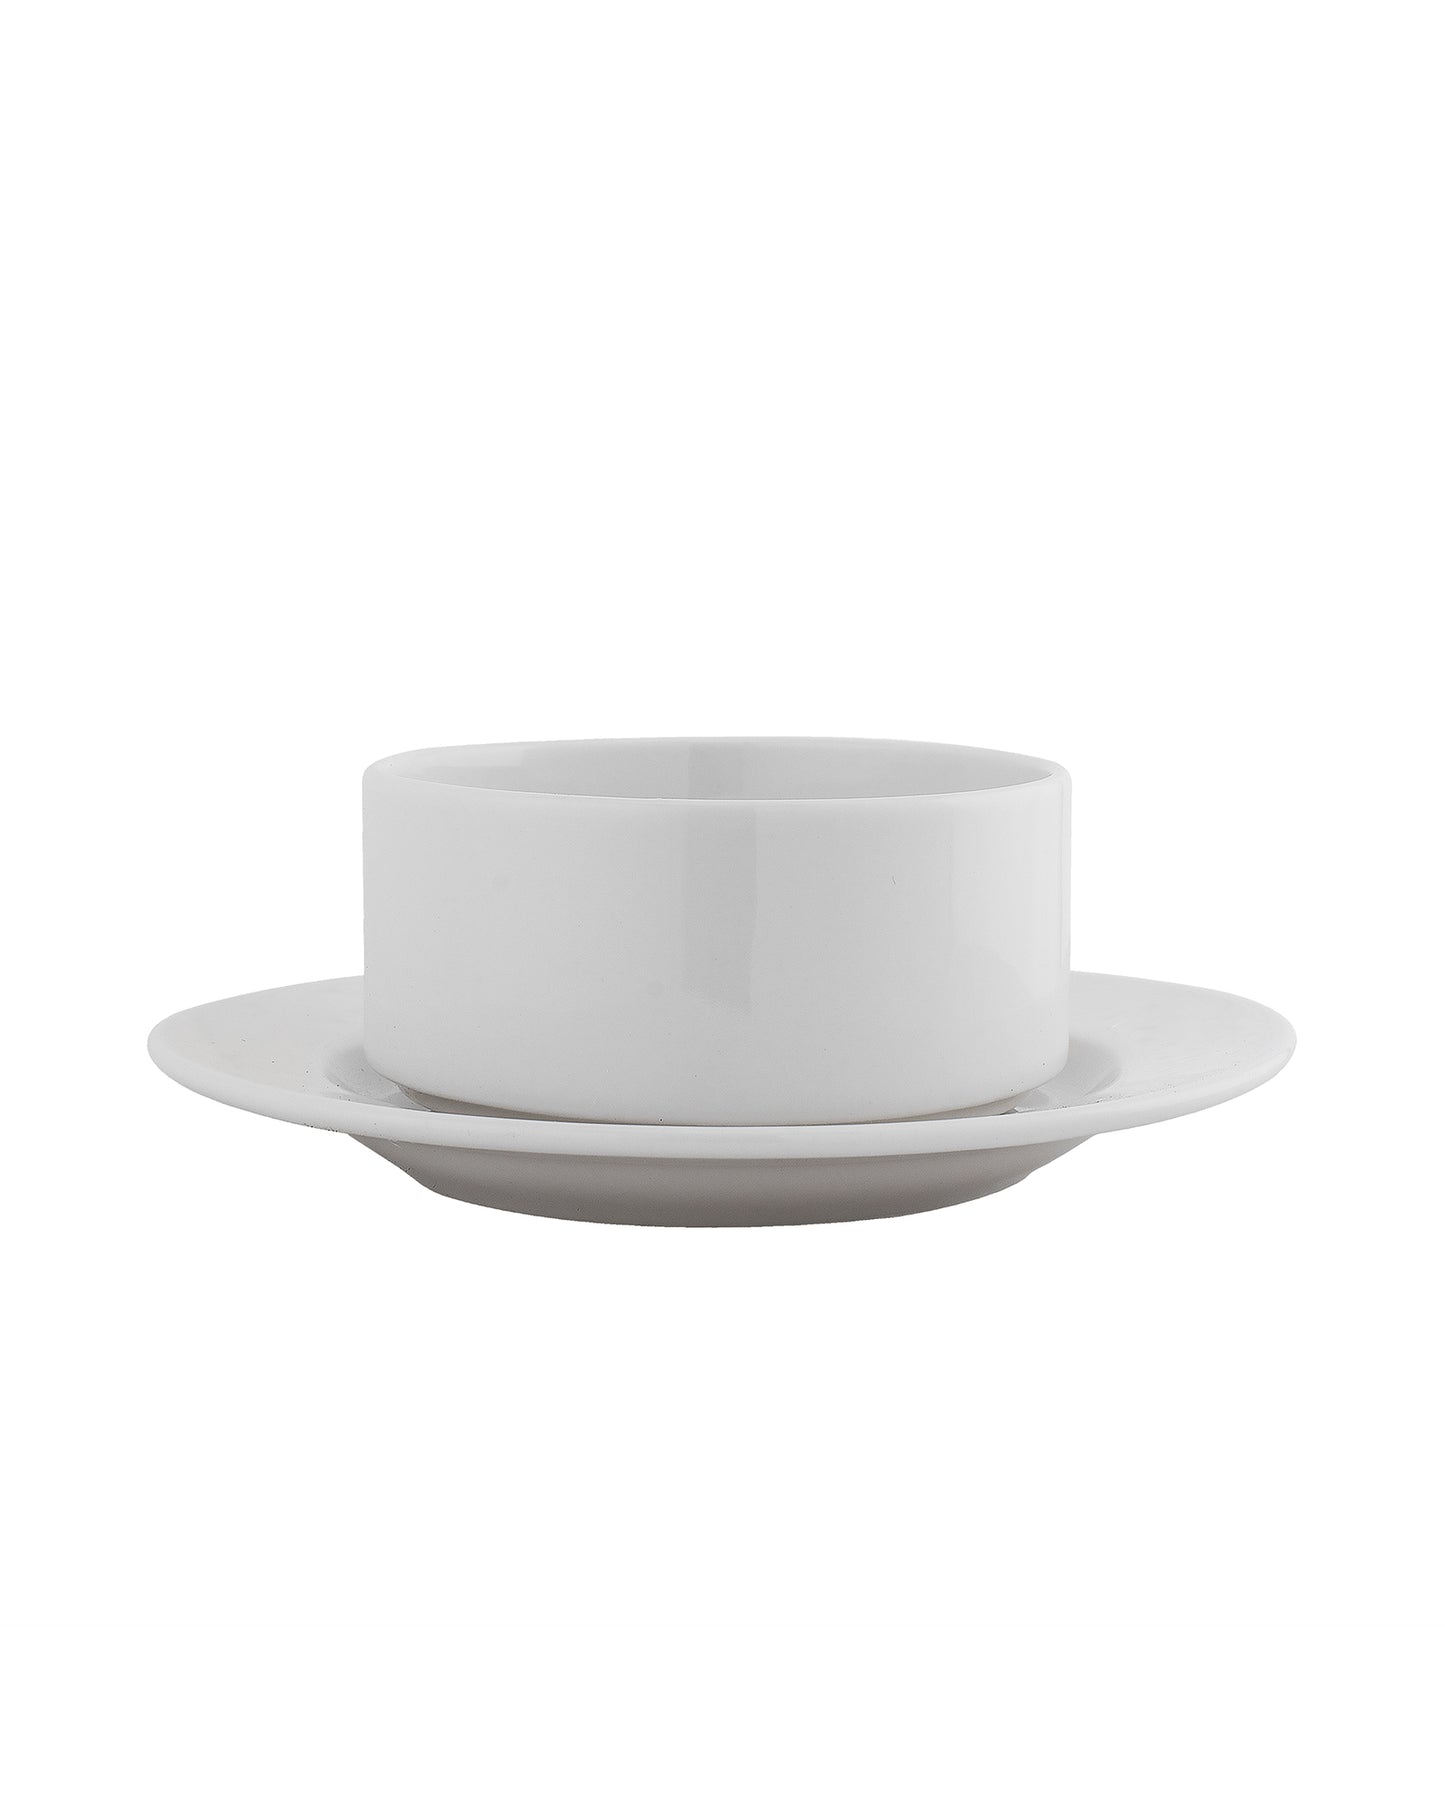 Fine Porcelain Classic Soup Bowl with Saucer